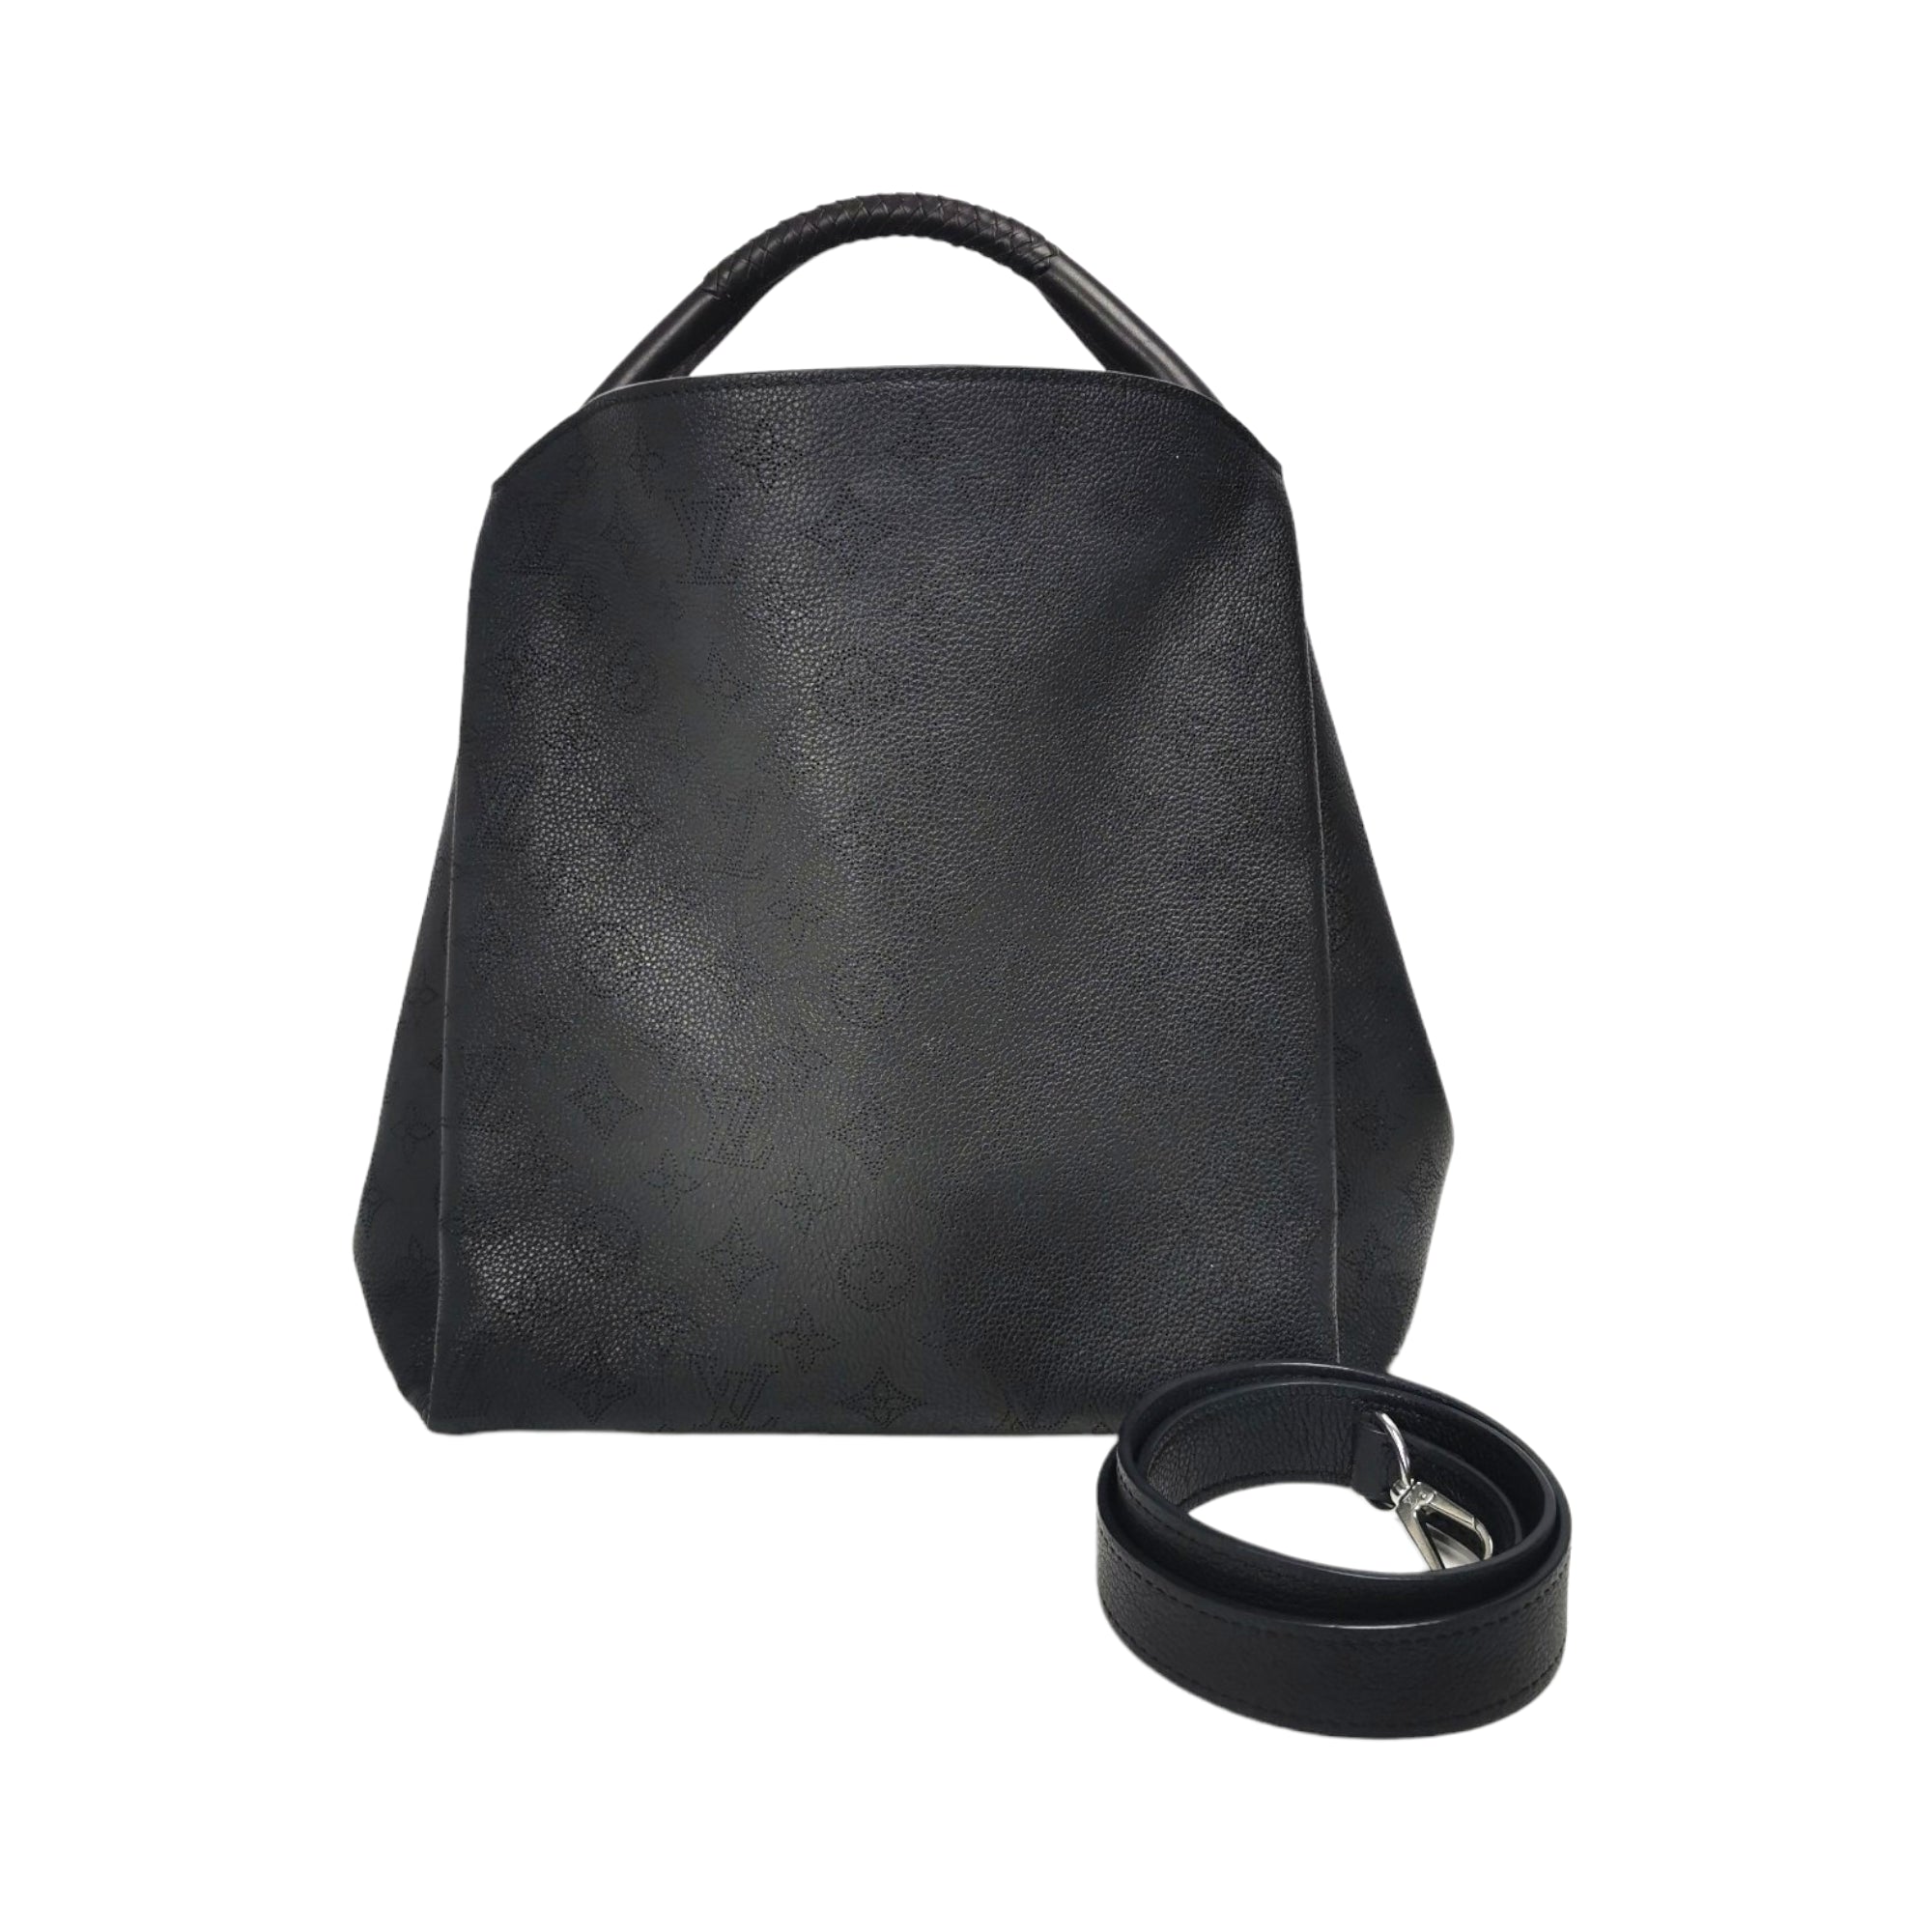 pm mahina leather bag